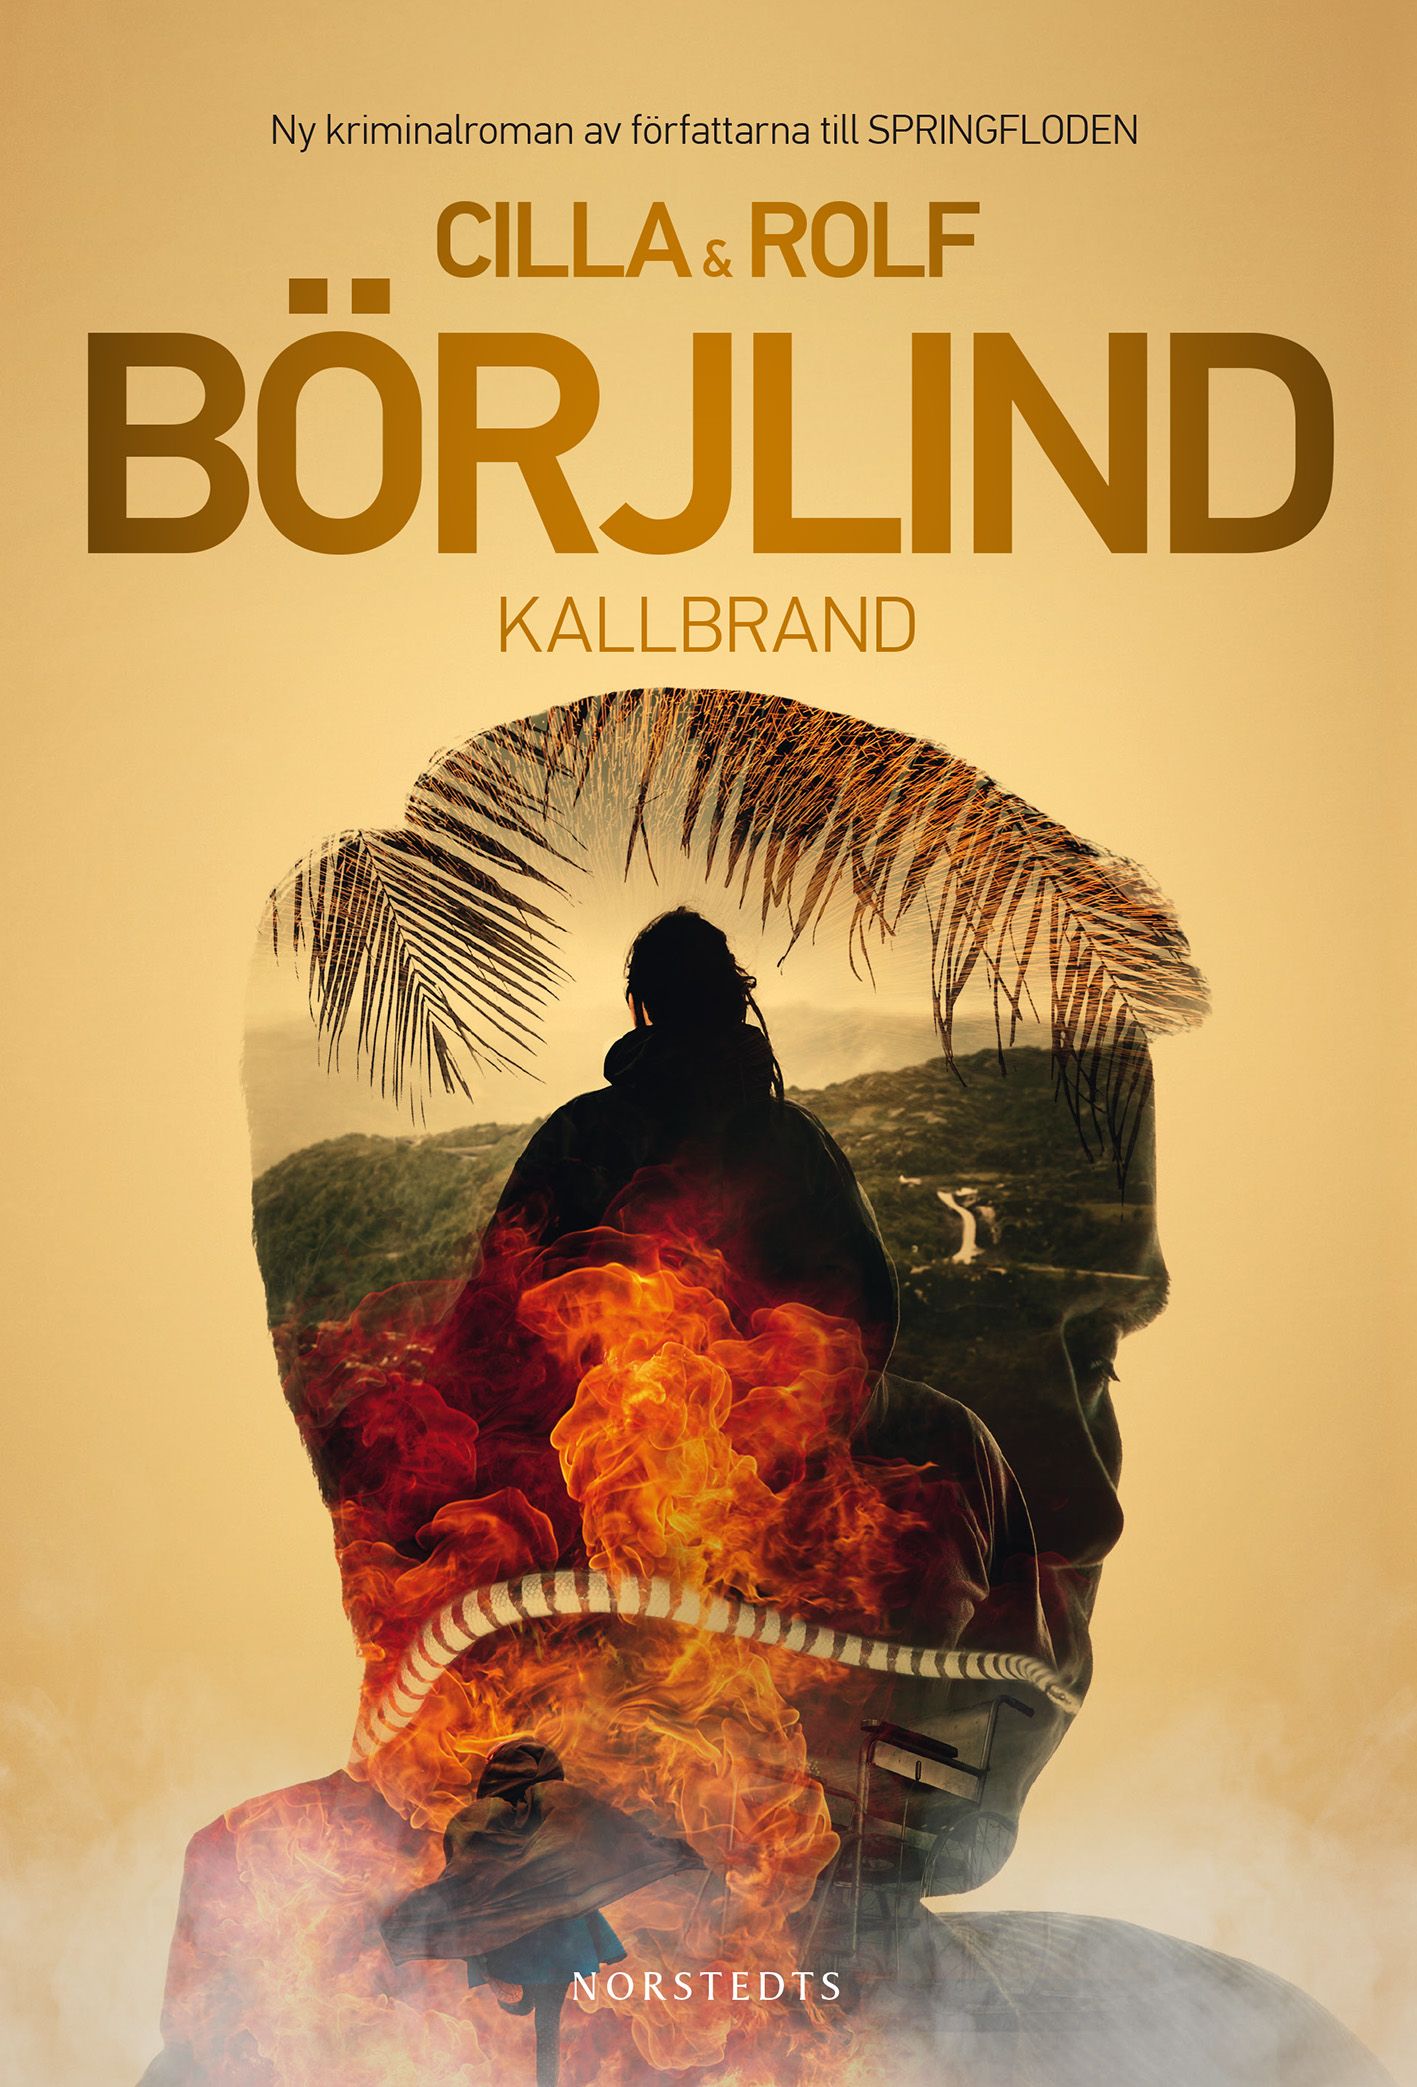 Kallbrand, eBook by Rolf Börjlind, Cilla Börjlind